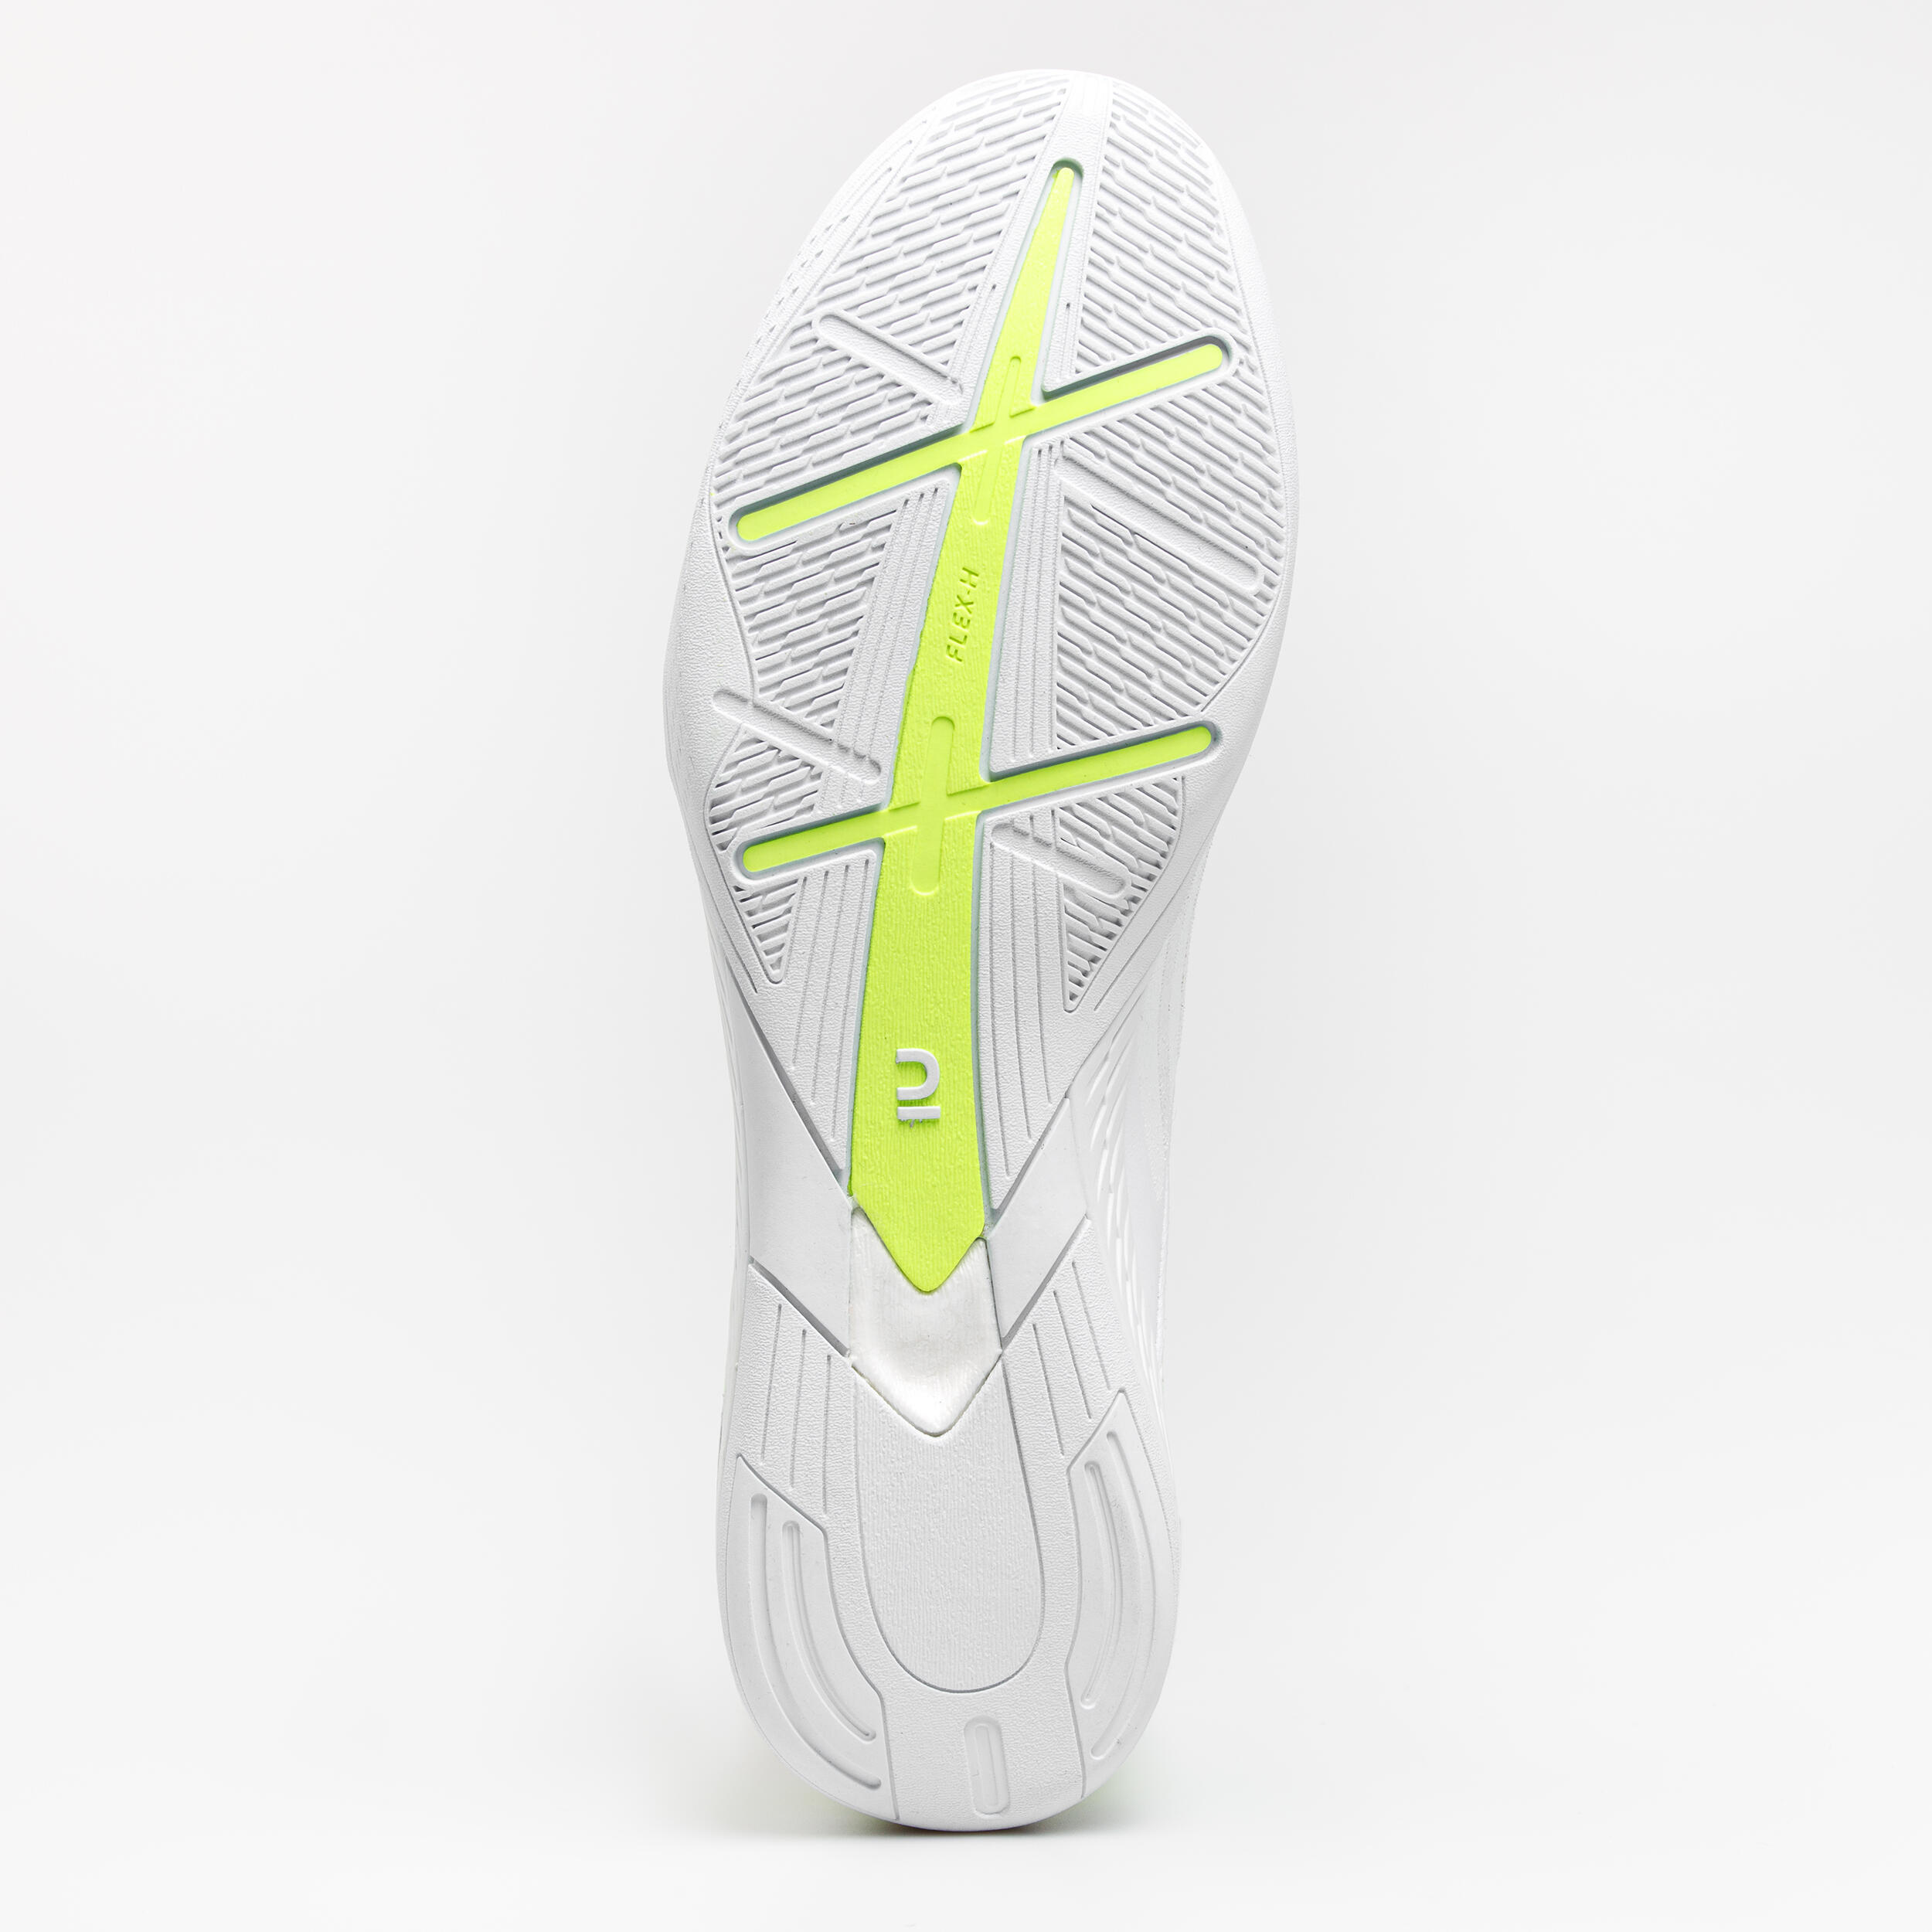 Futsal Shoes Ginka Pro - White/Yellow KIPSTA | Decathlon